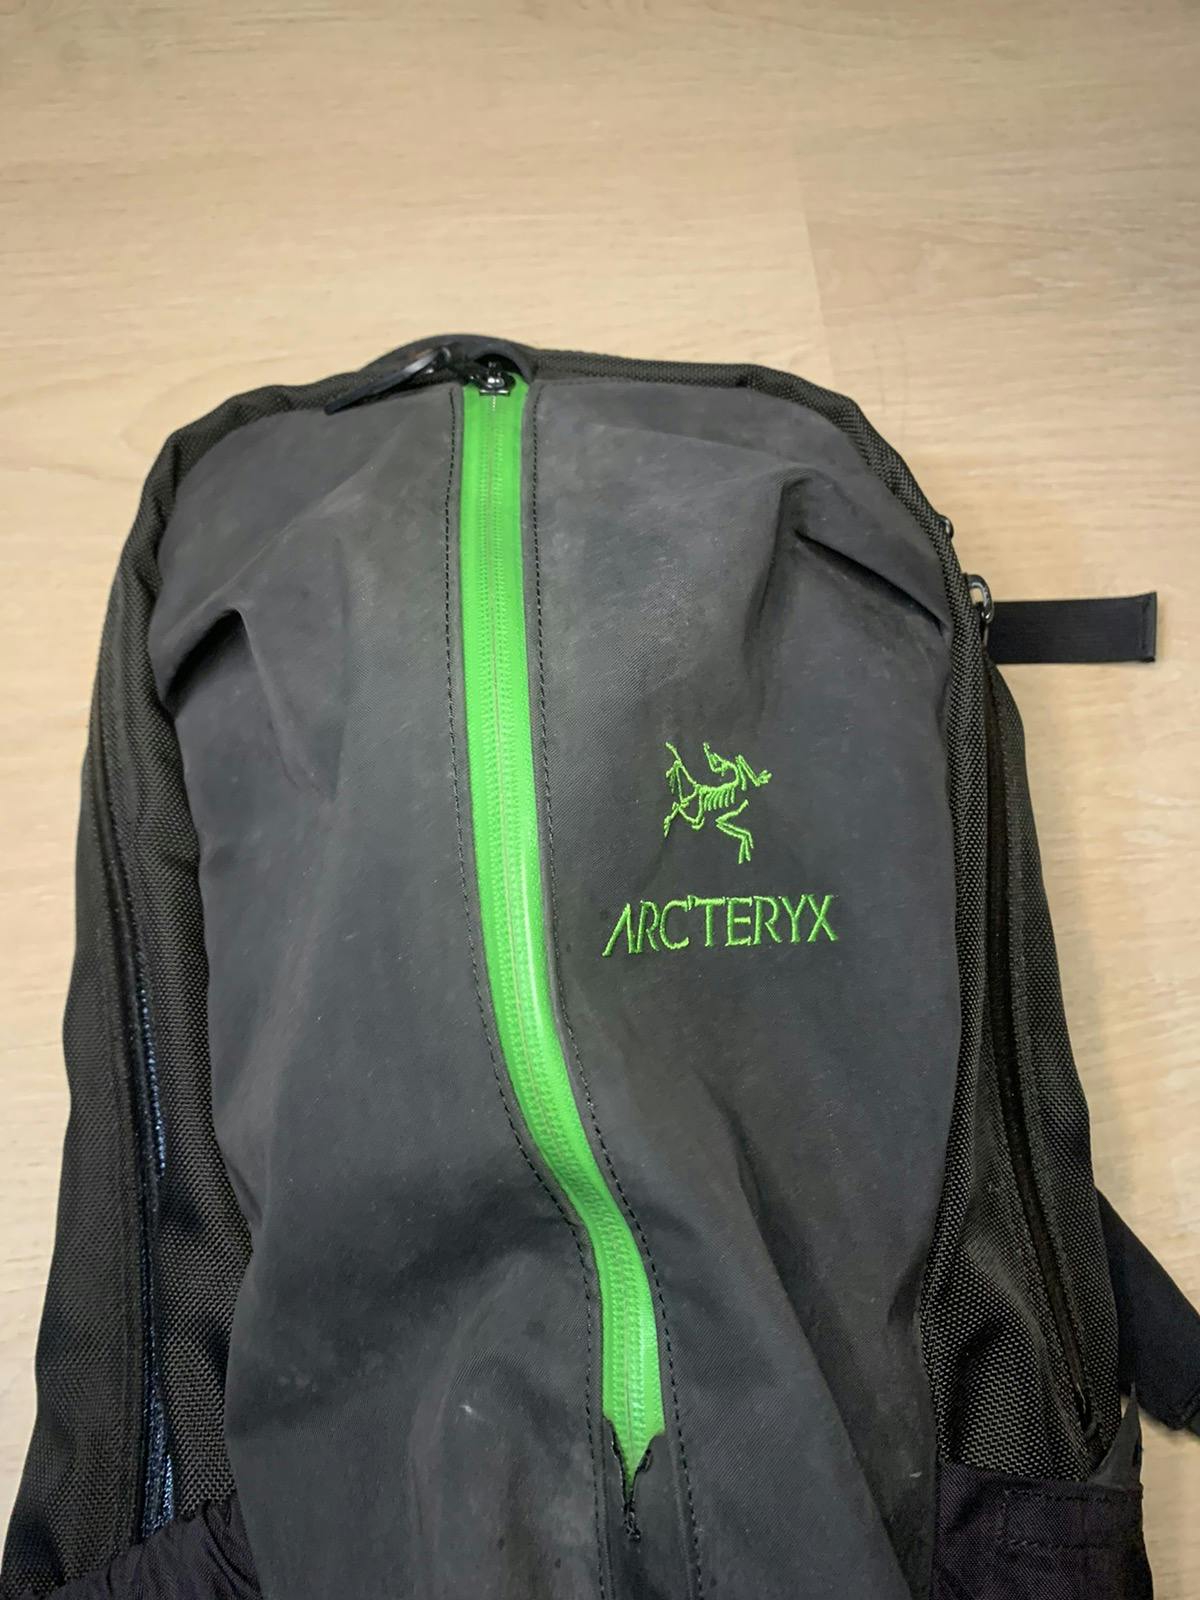 Arcteryx Arro 22 Waterproof Backpack - 2